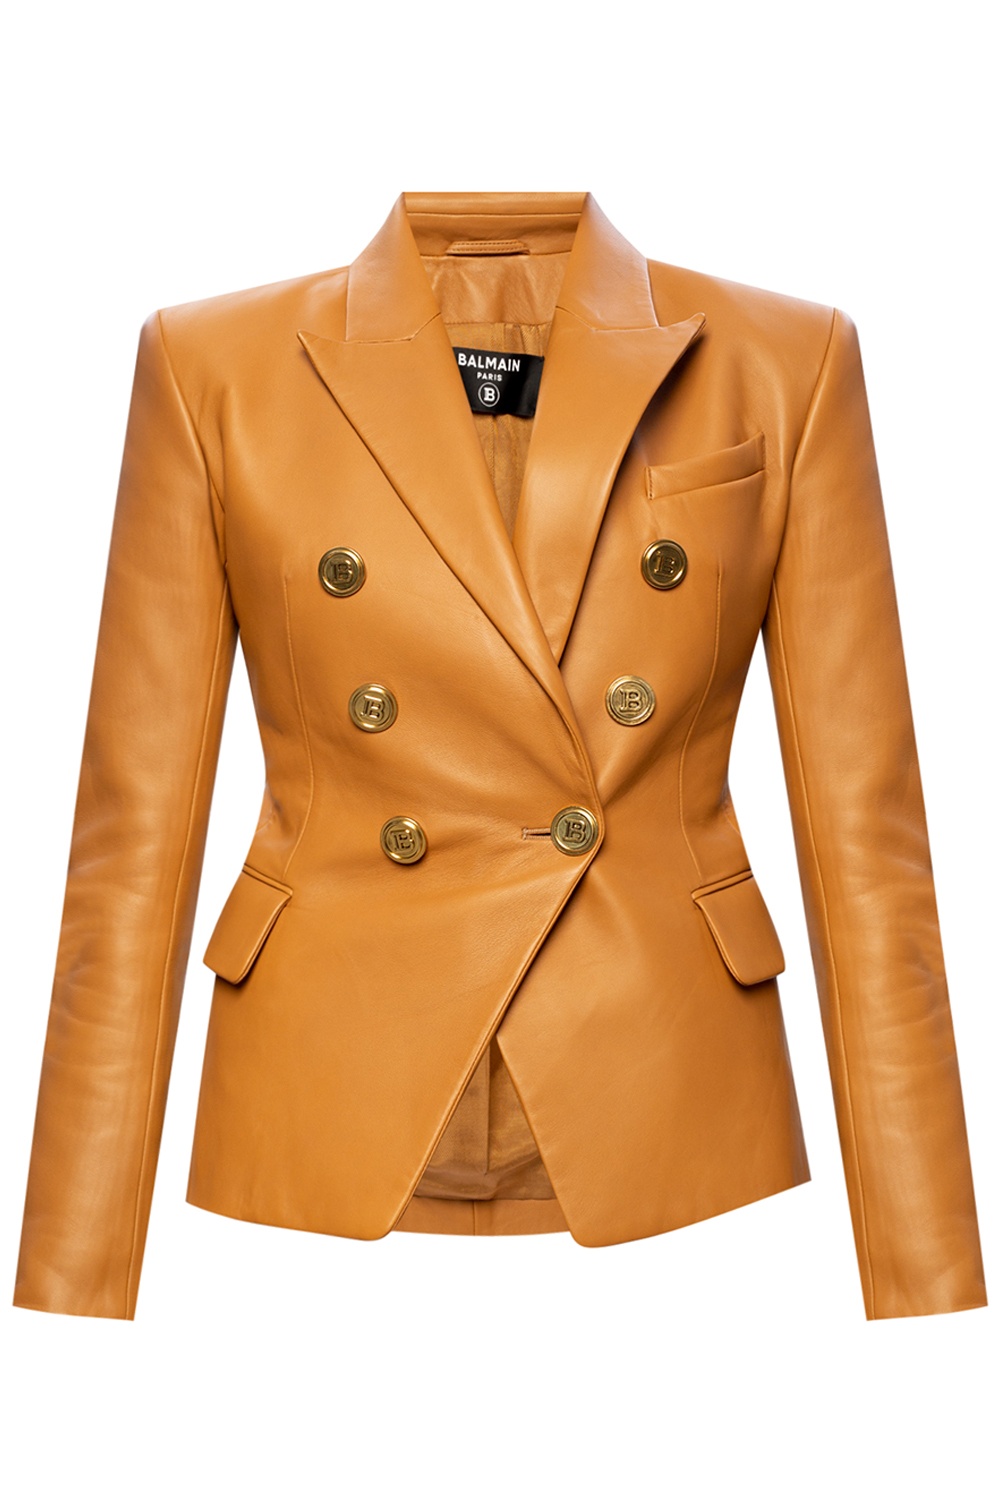 Balmain blazer | Women's Clothing | Vitkac